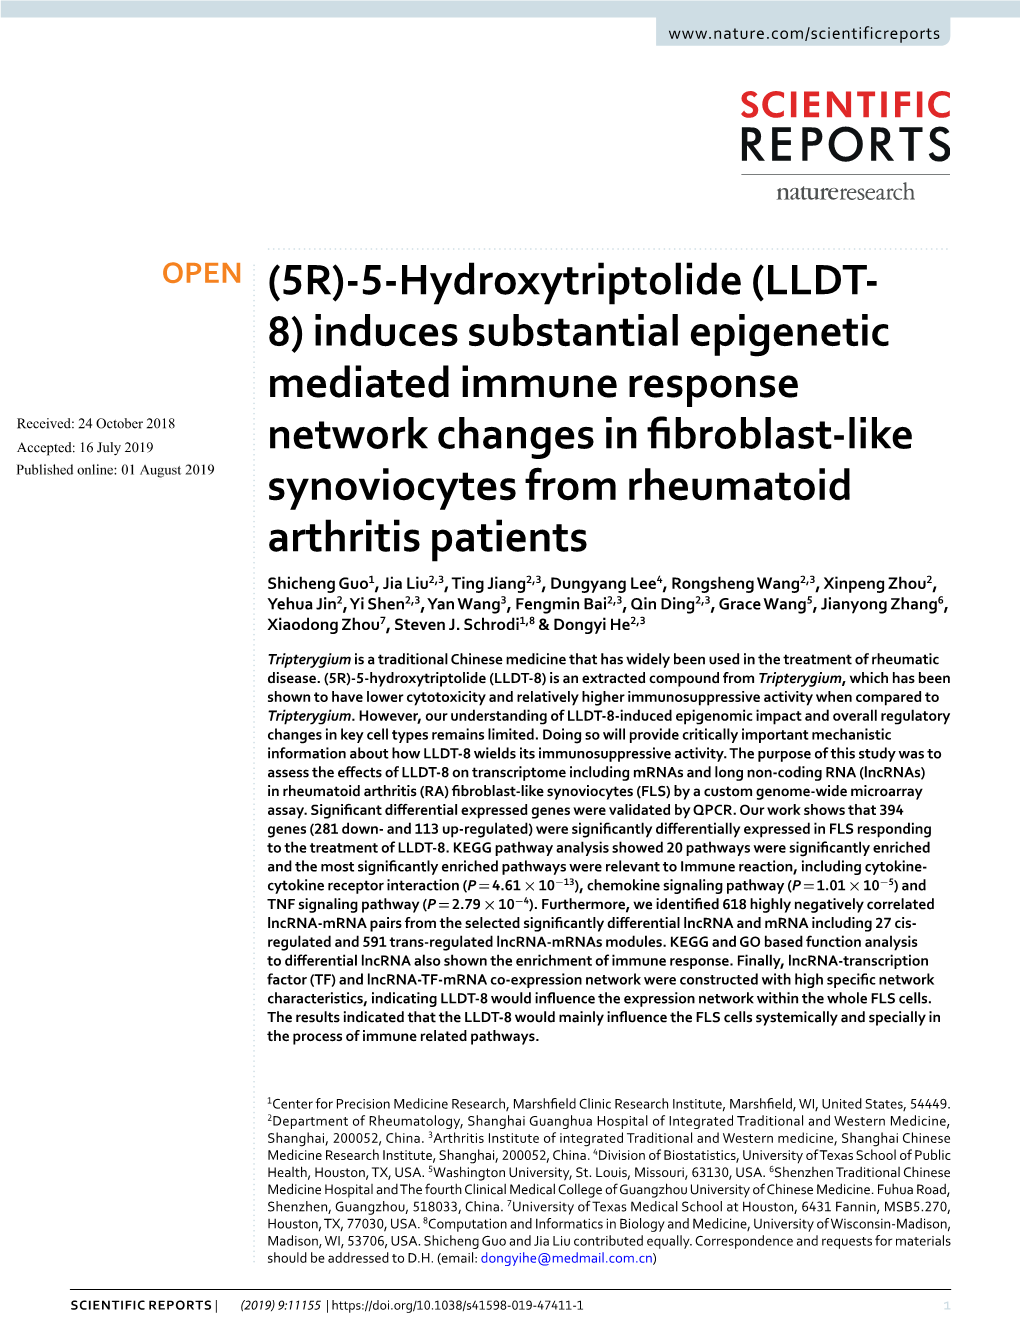 5R)-5-Hydroxytriptolide (LLDT-8